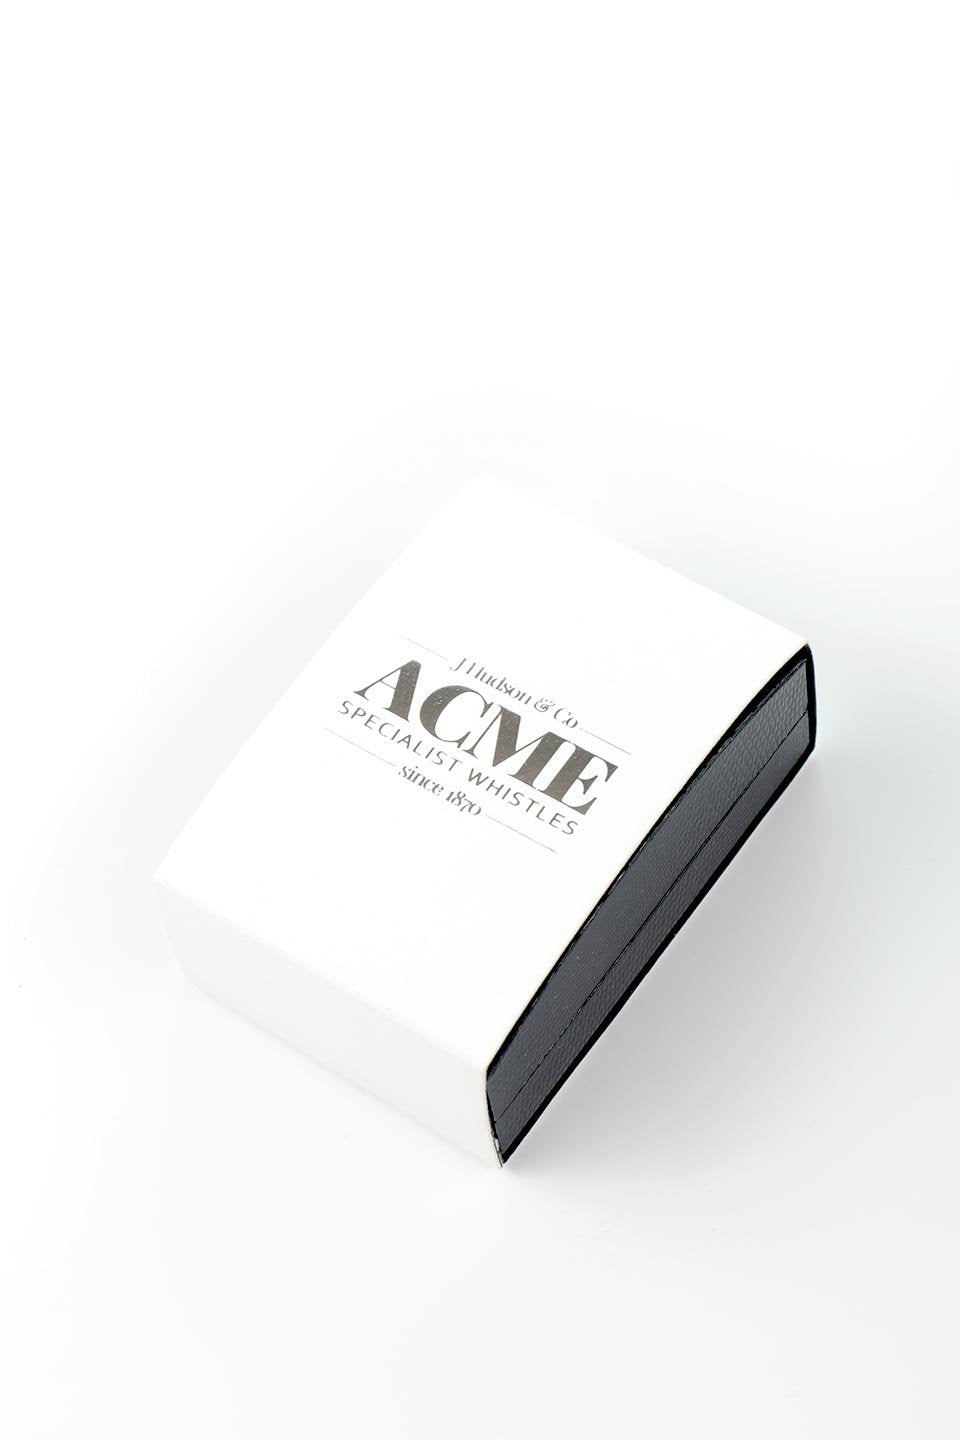 Acme Silent Dog Whistle (Silver) アクメ社・サイレントドッグホイッスル（シルバー） / Acme